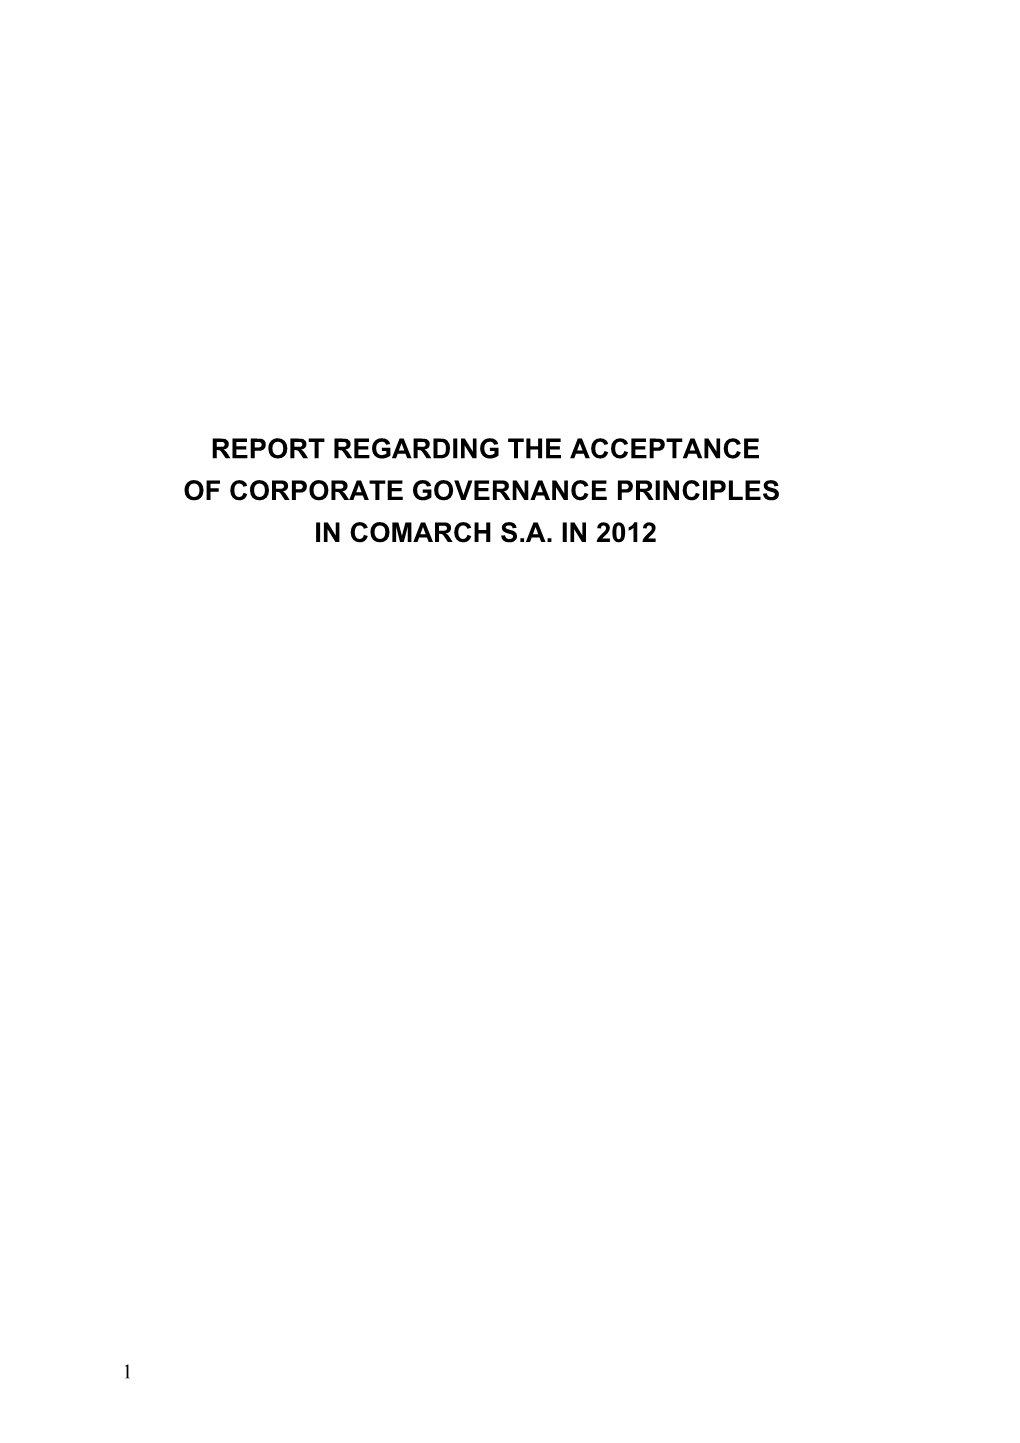 Report Regarding the Acceptance